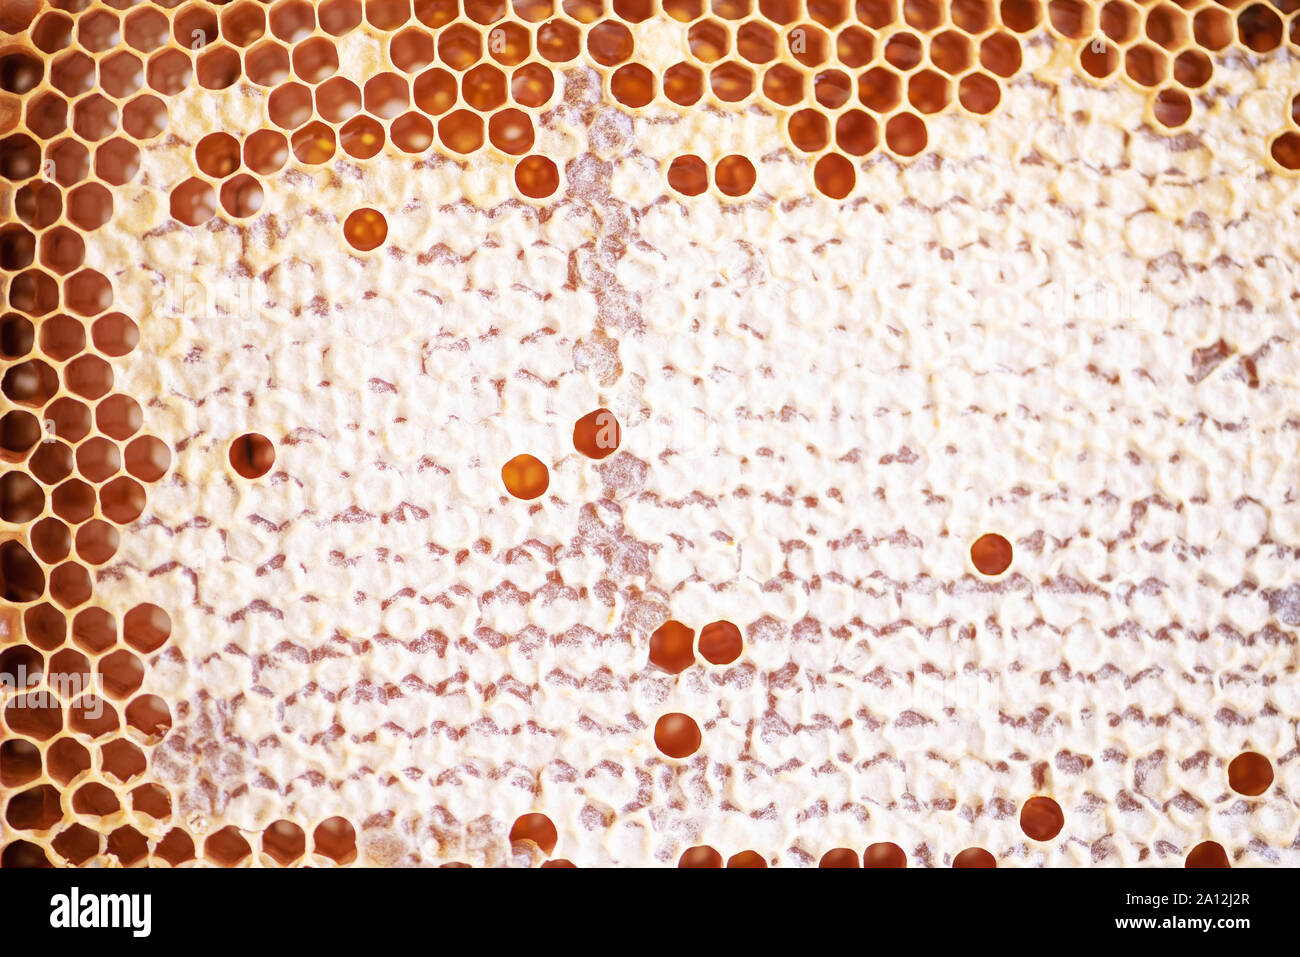 Honeycomb with cells full of fresh honey. Macro photography Stock Photo